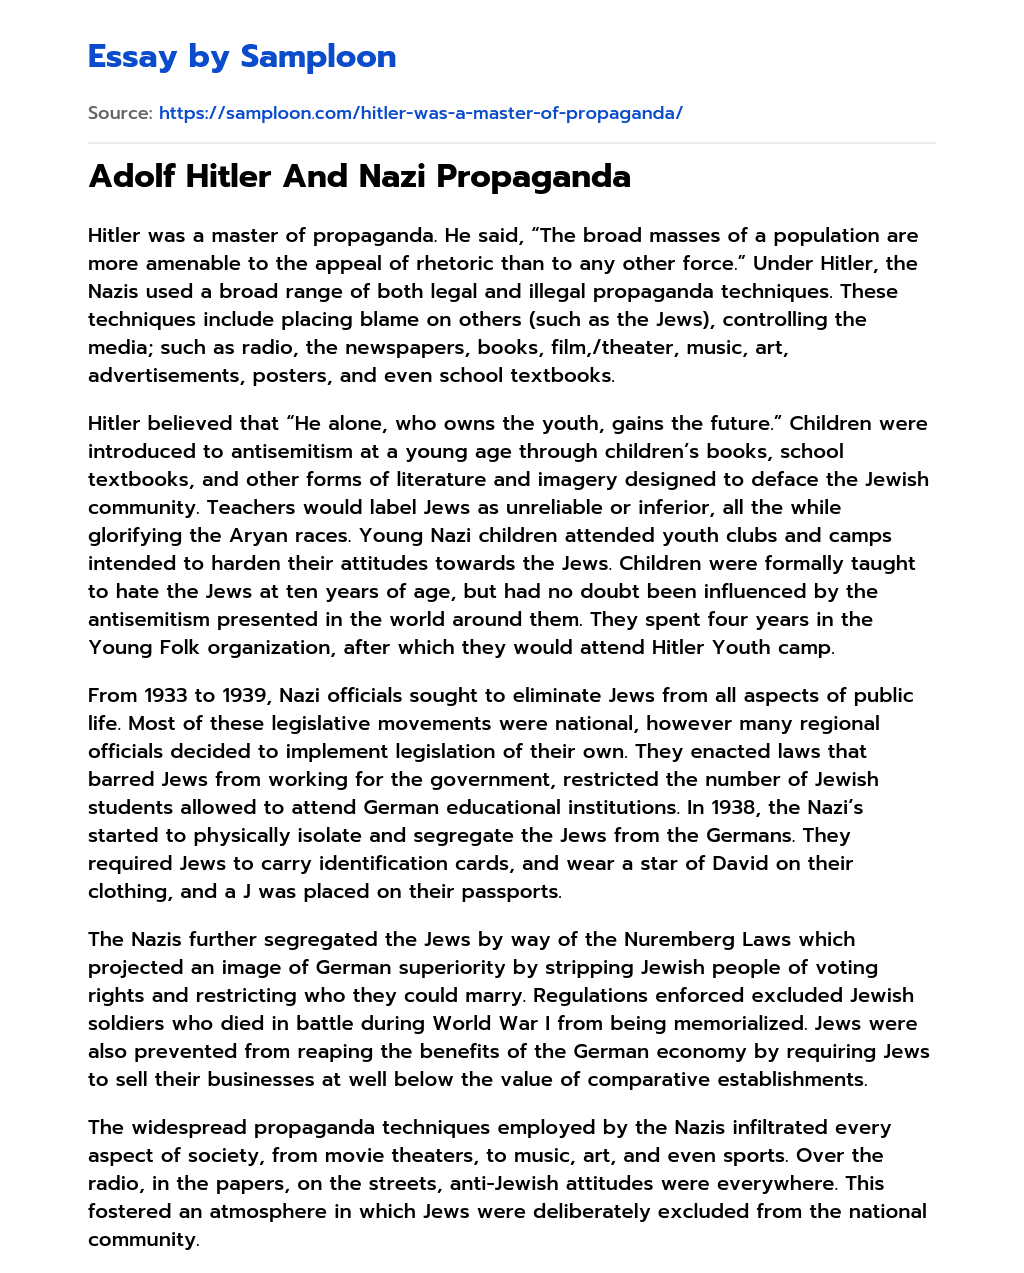 Adolf Hitler And Nazi Propaganda essay